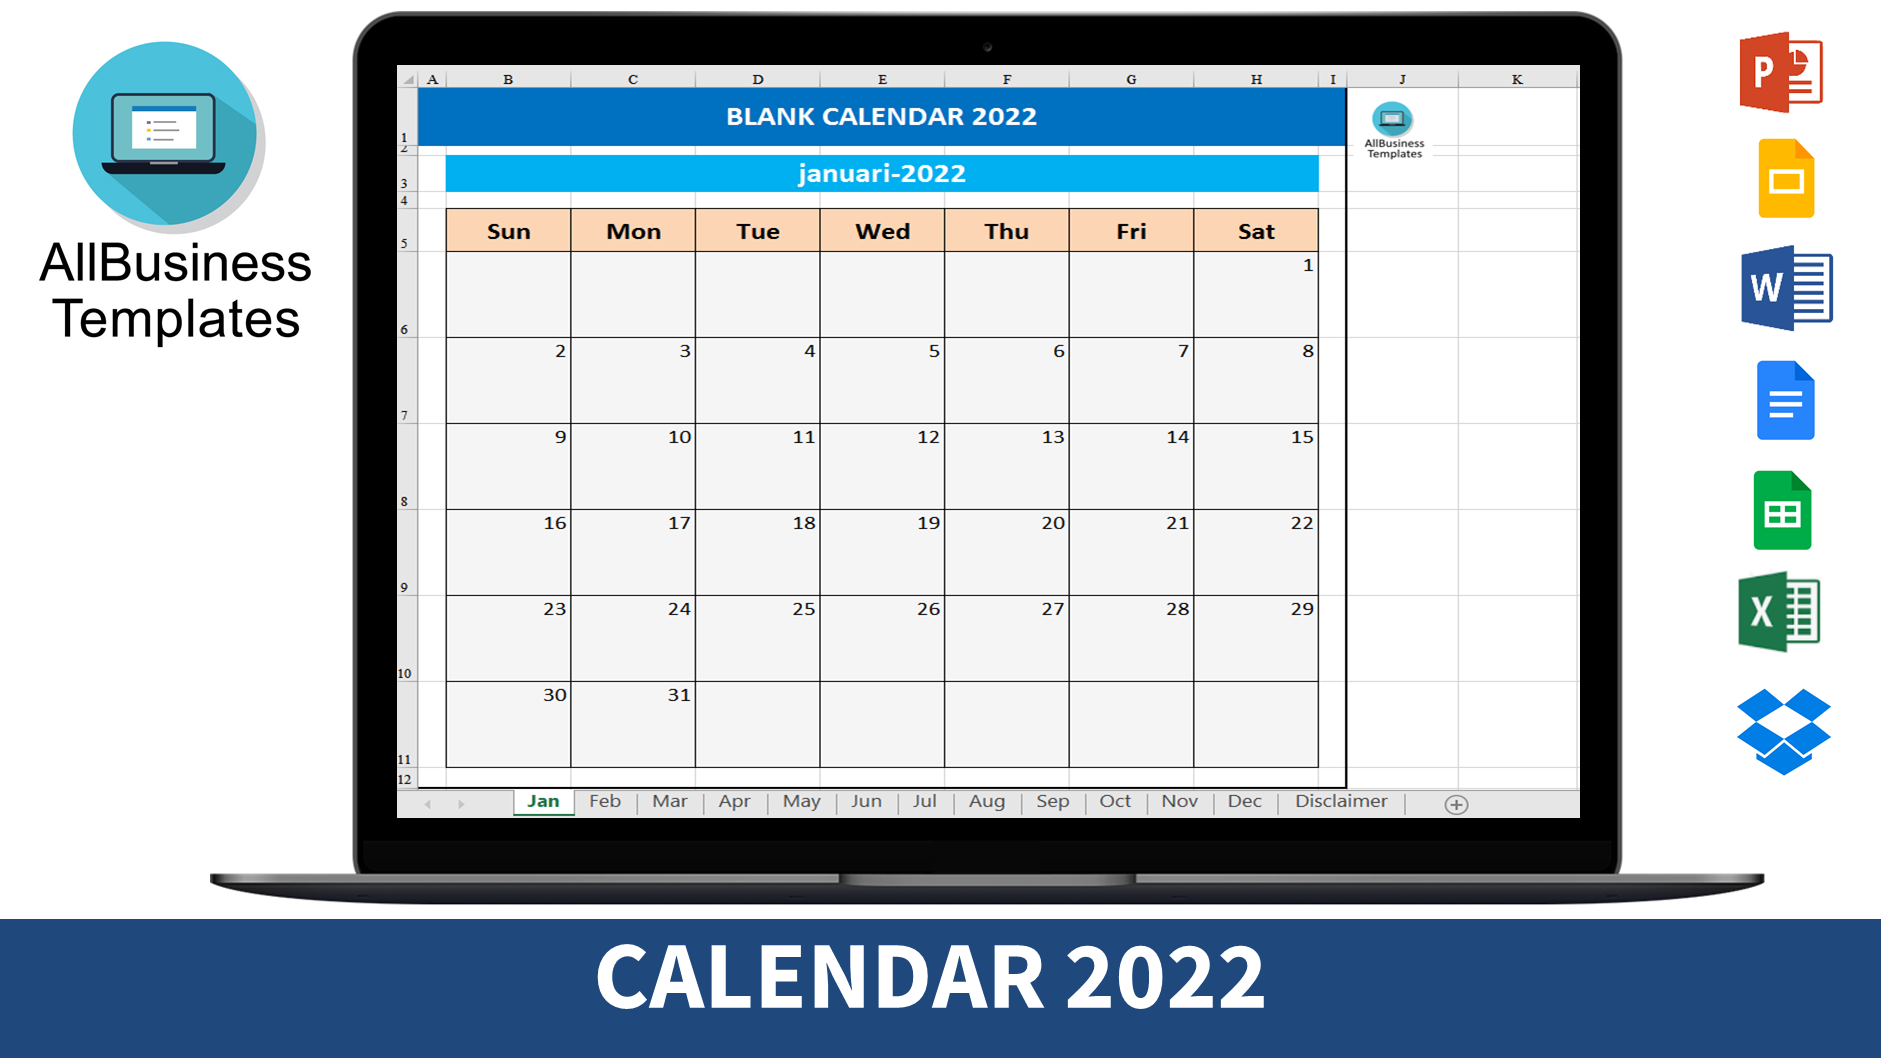 Calendar 2022 main image